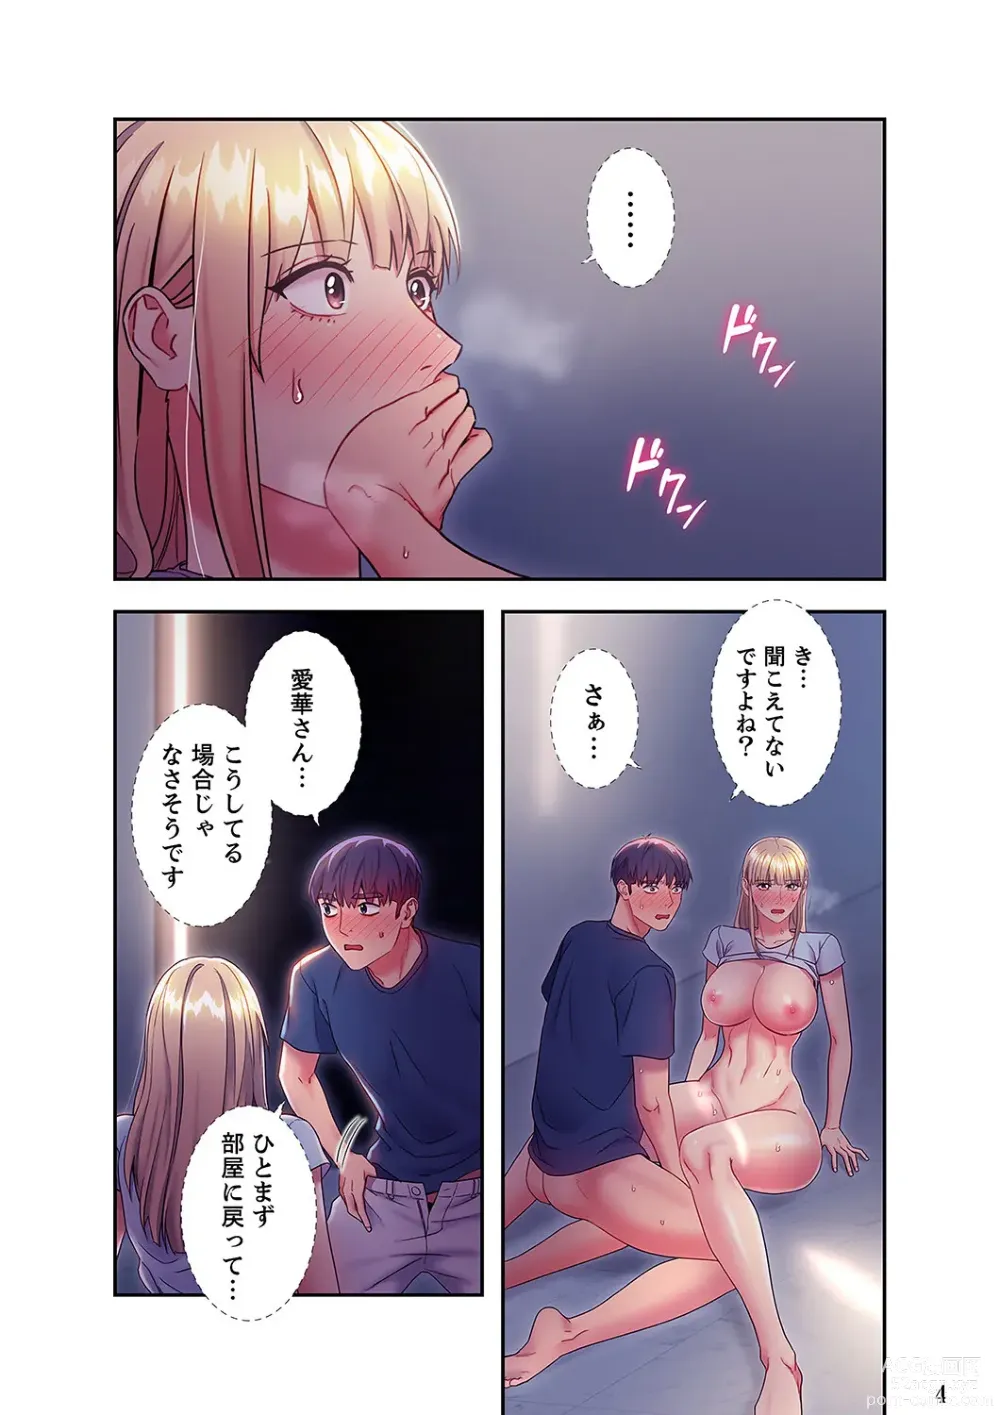 Page 4 of manga Harem x Harem 3